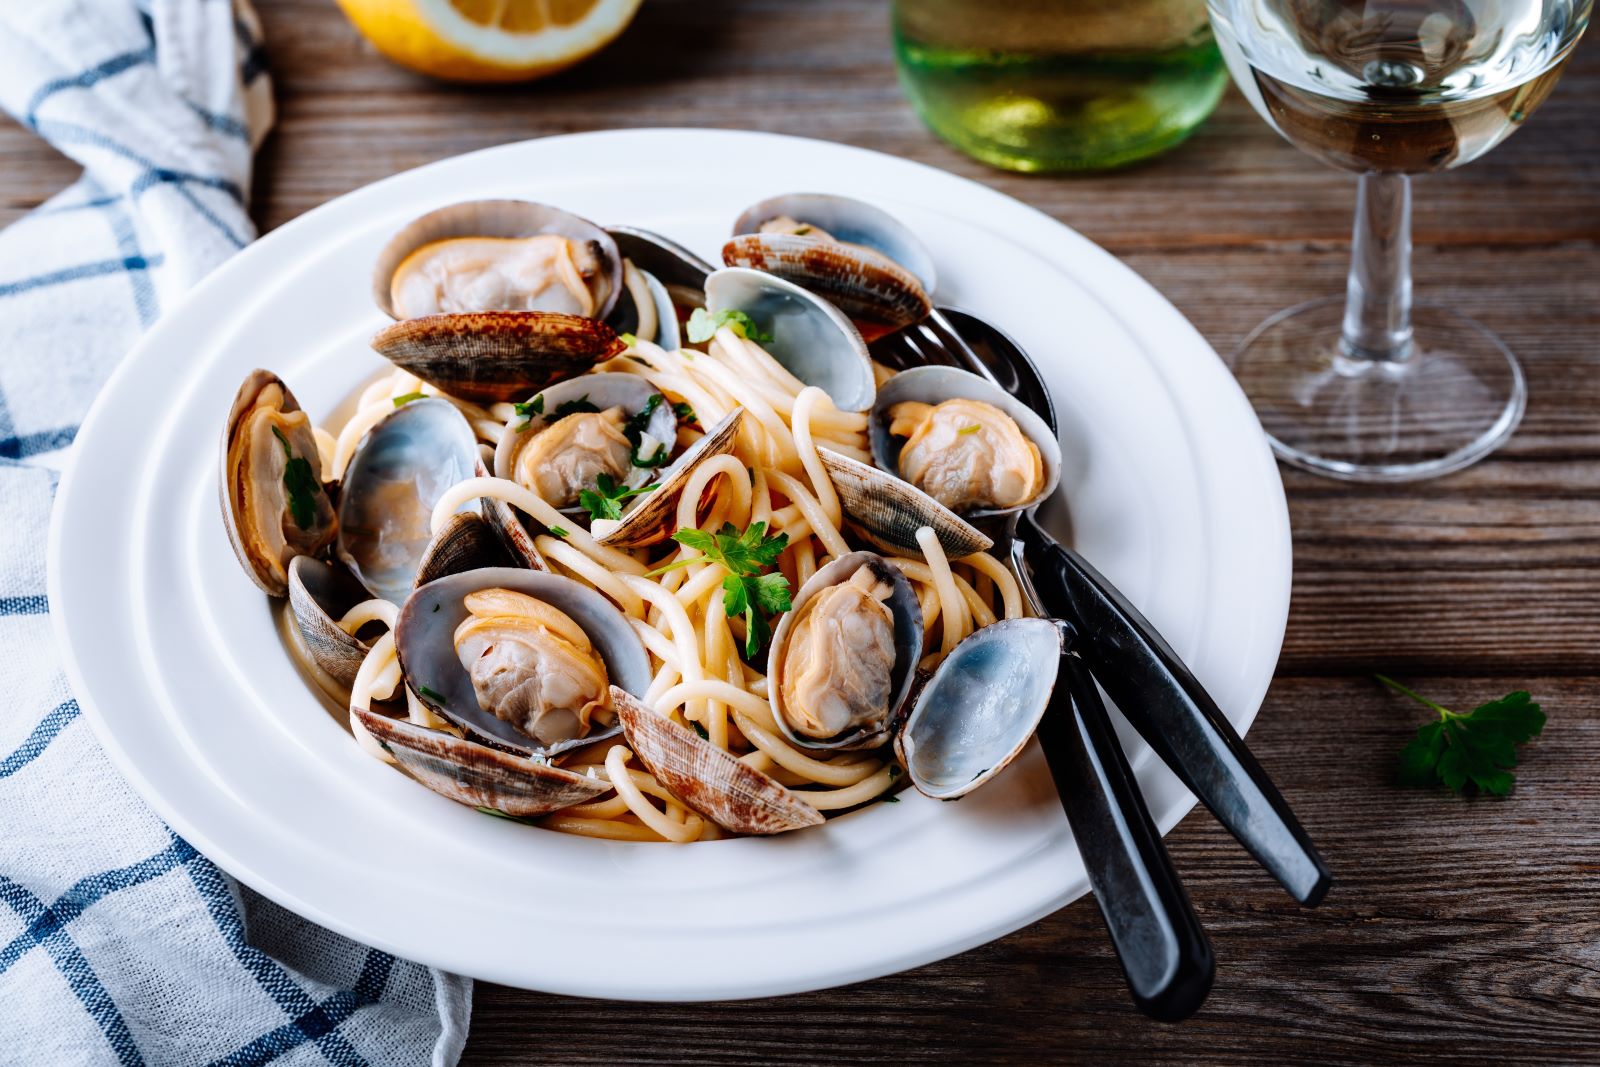 A dish of clams and spaghetti.